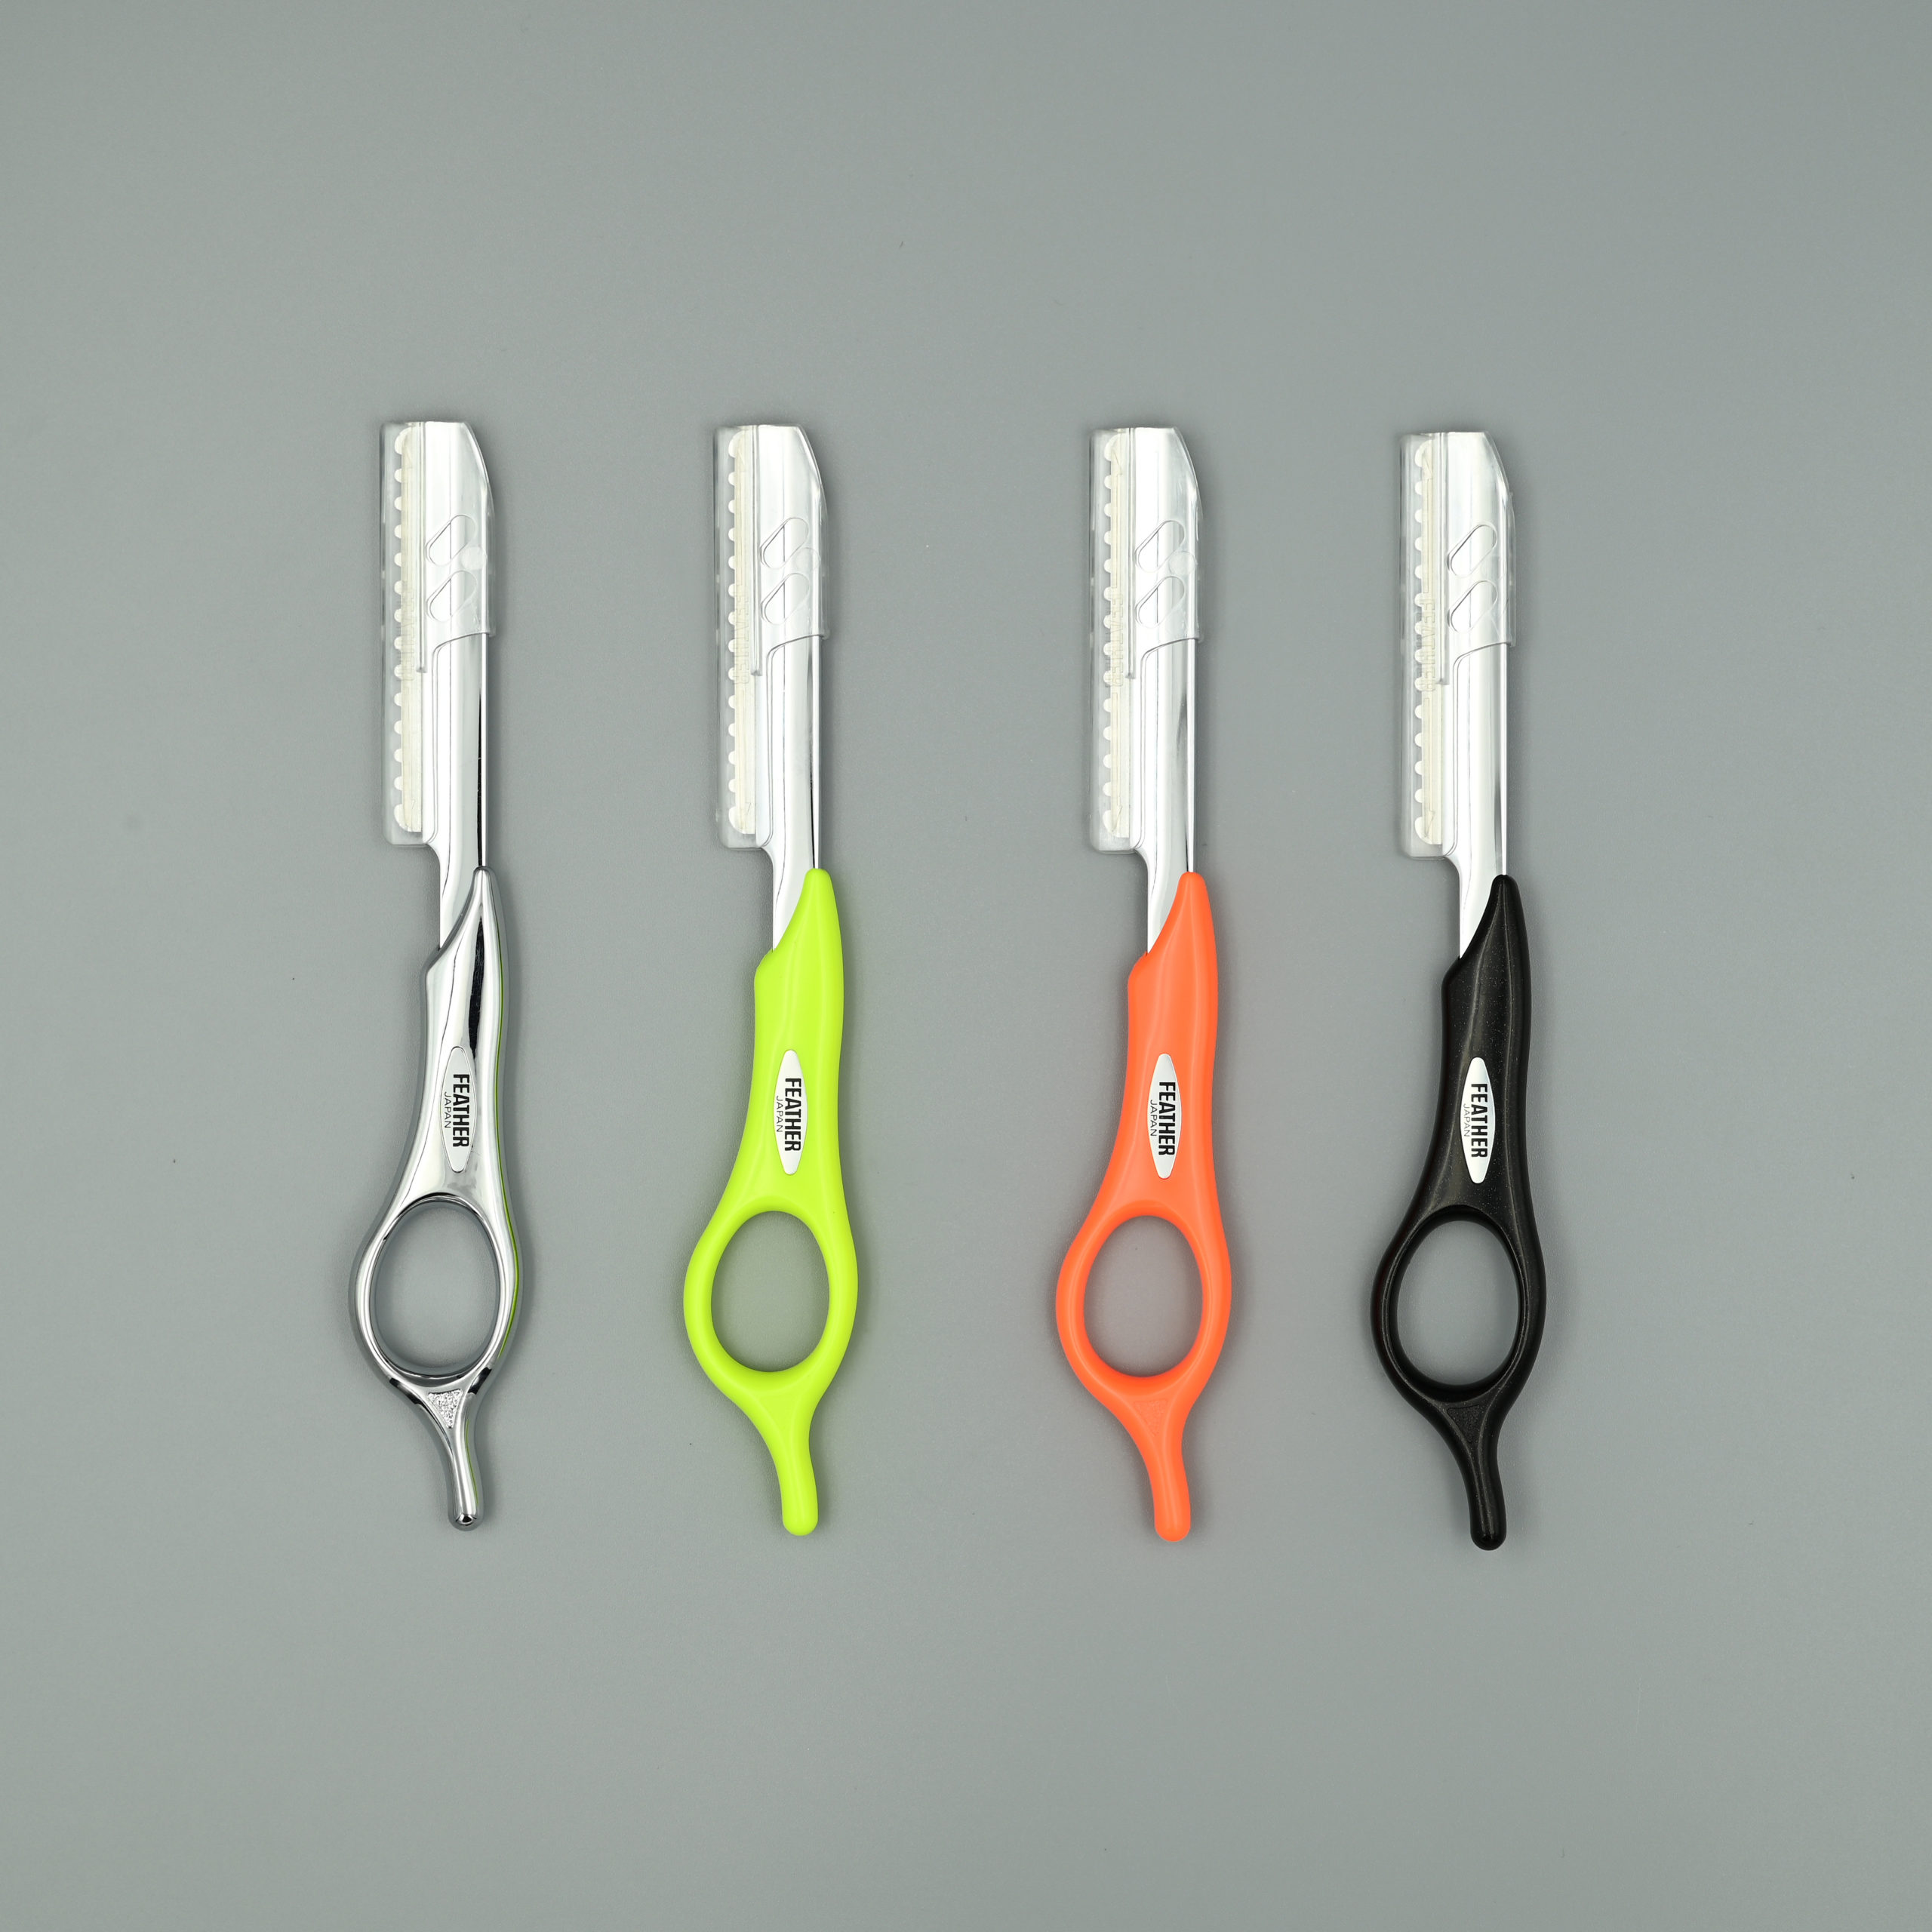 Z'Blade 3D Texture Spinning Razor Hair Cutting Tool - BLUE New w